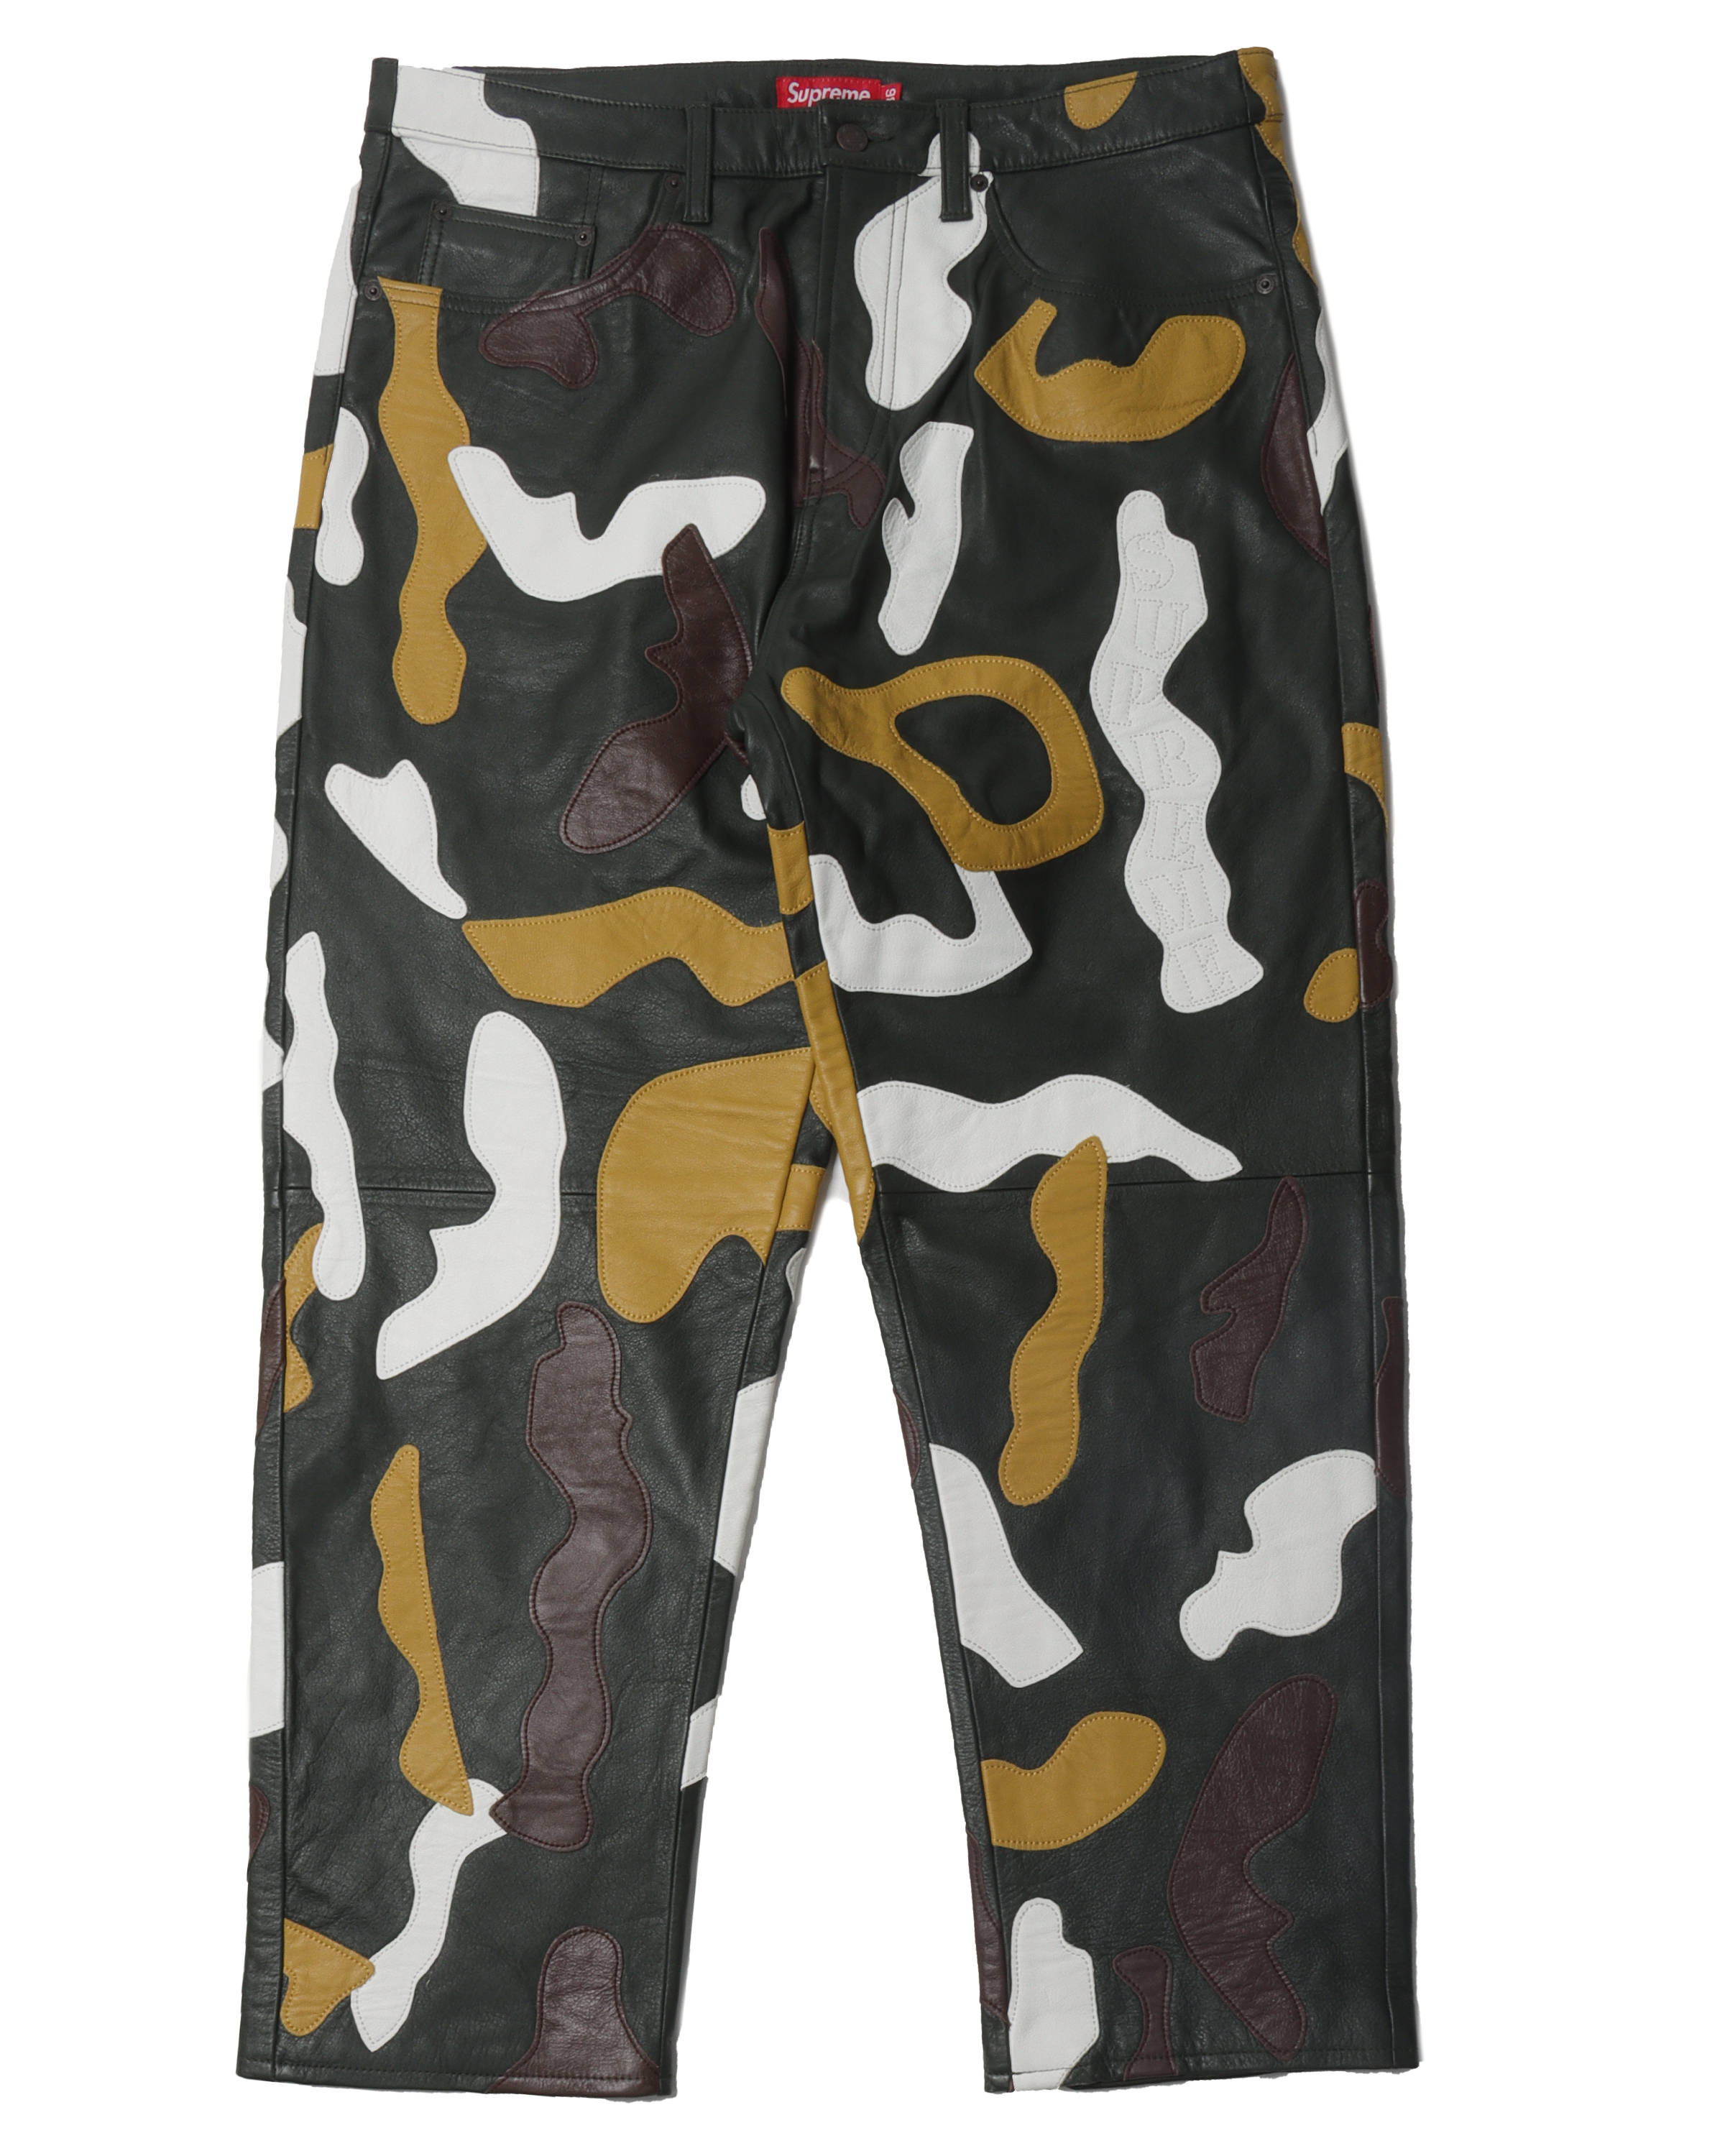 Supreme AW19 Camouflage Leather 5-Pocket Pants